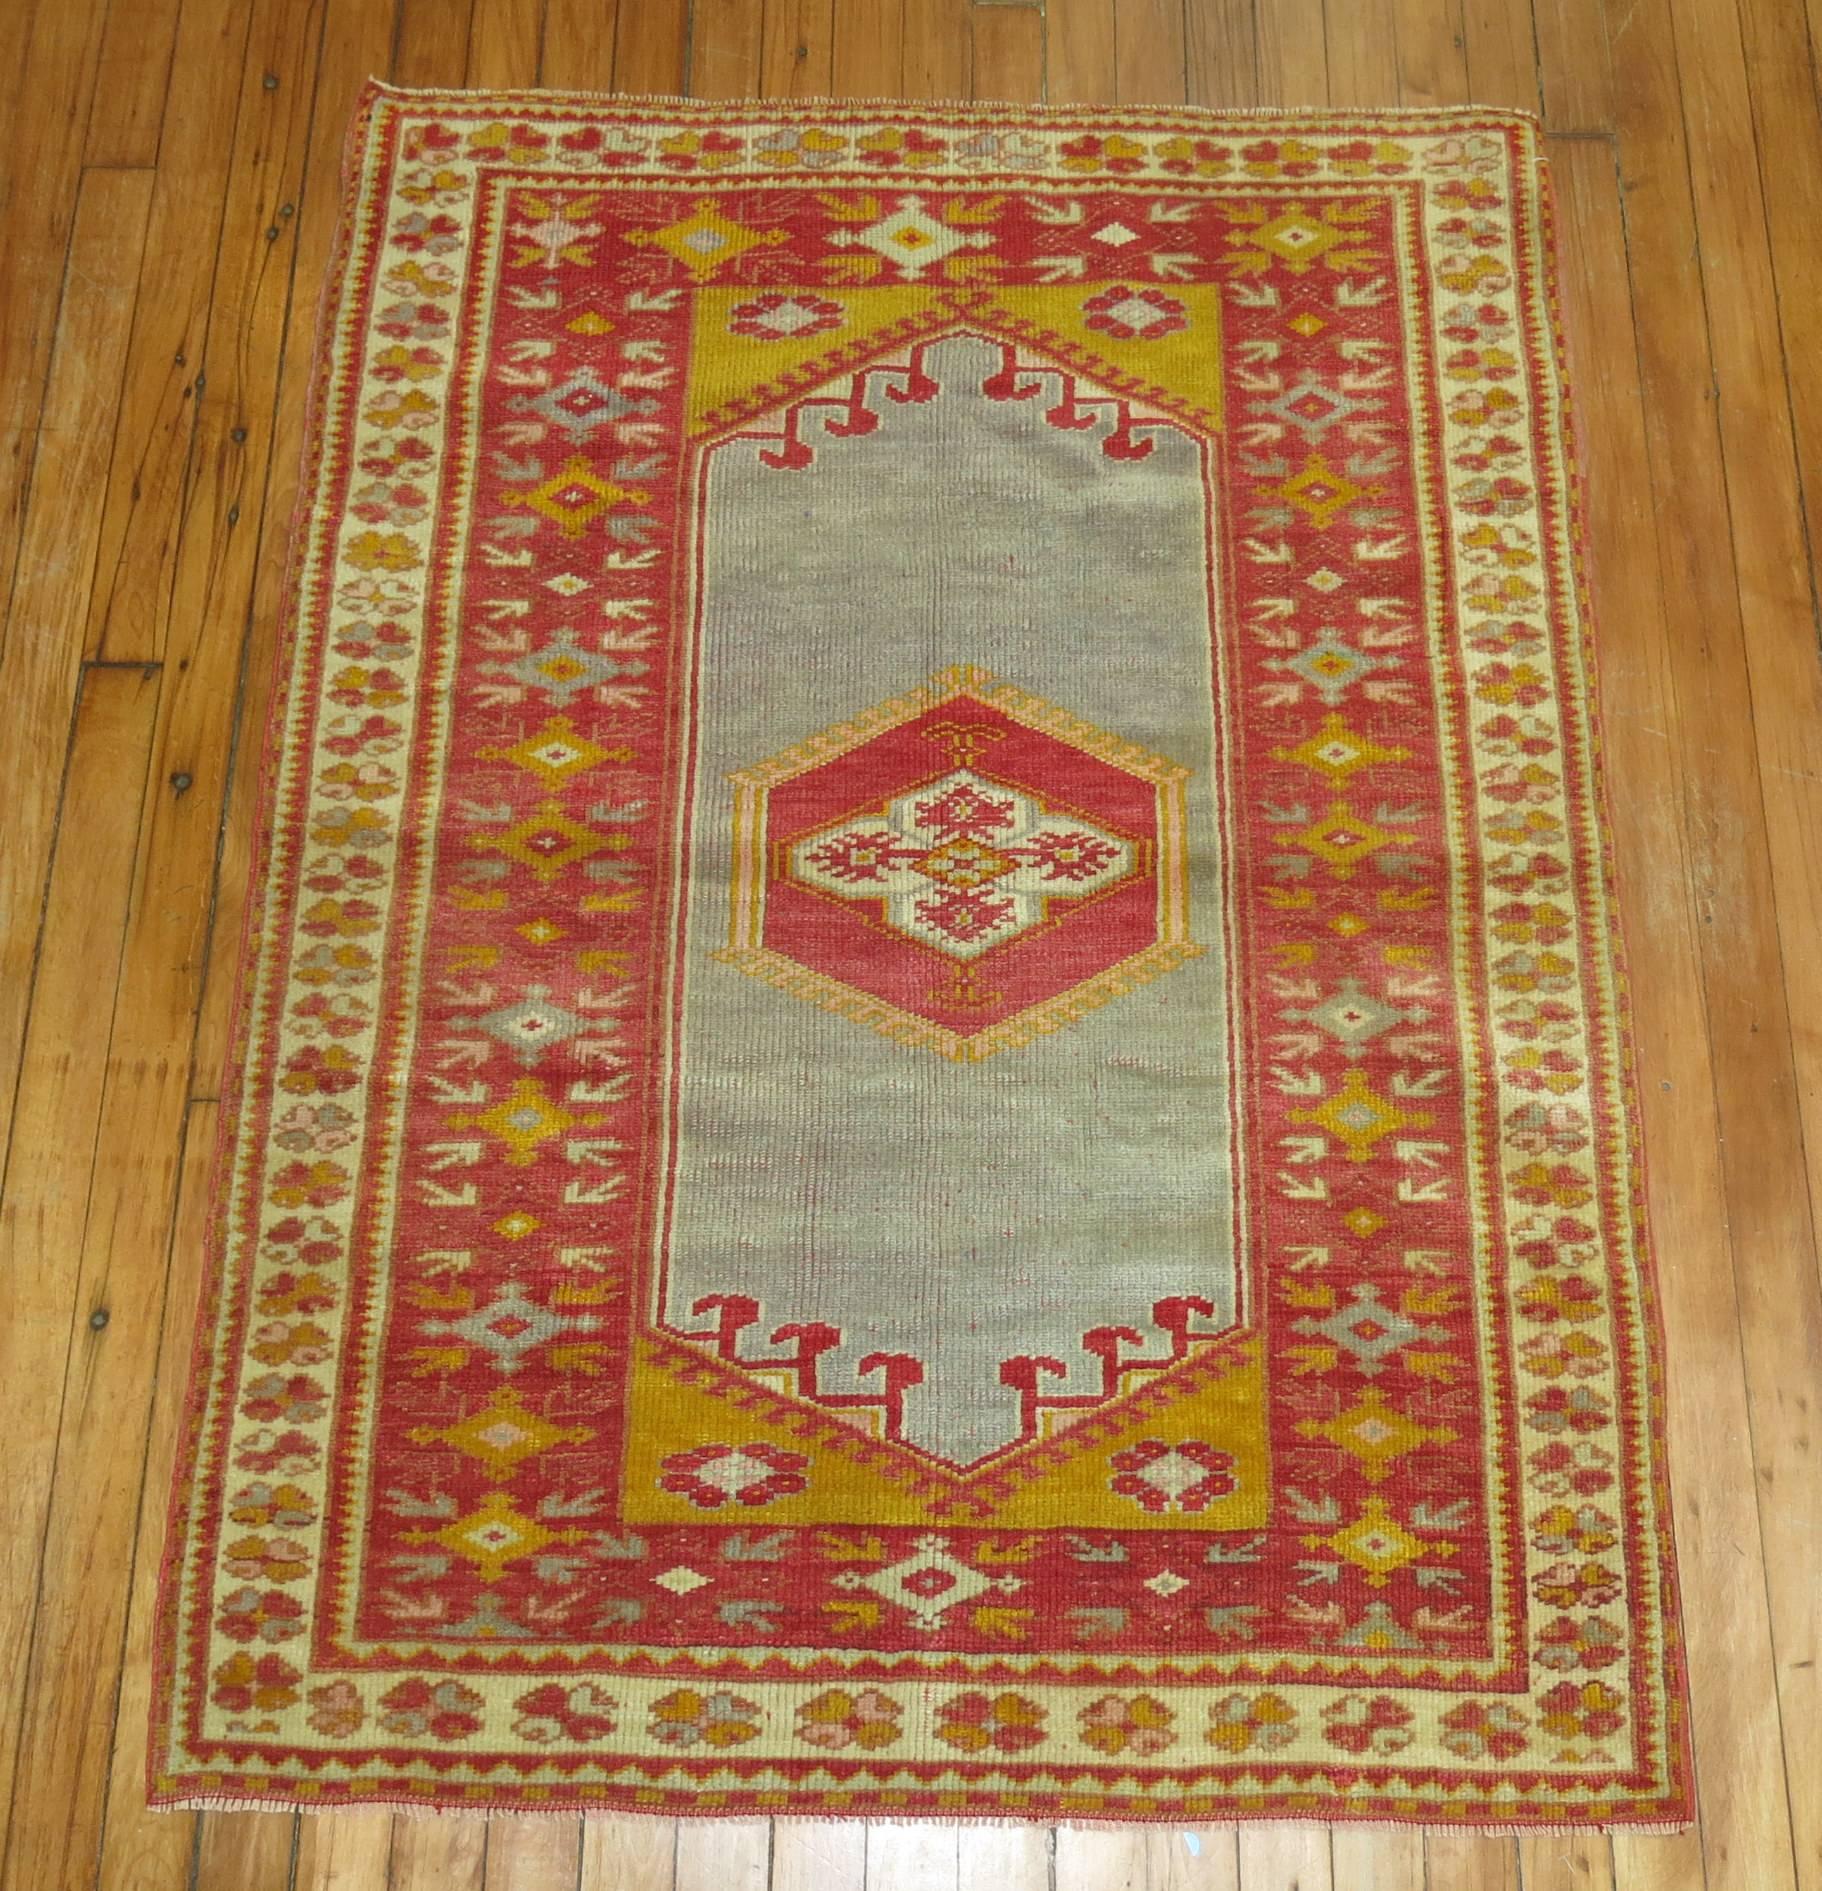 An early 20th century blue ground Turkish Melas rug.